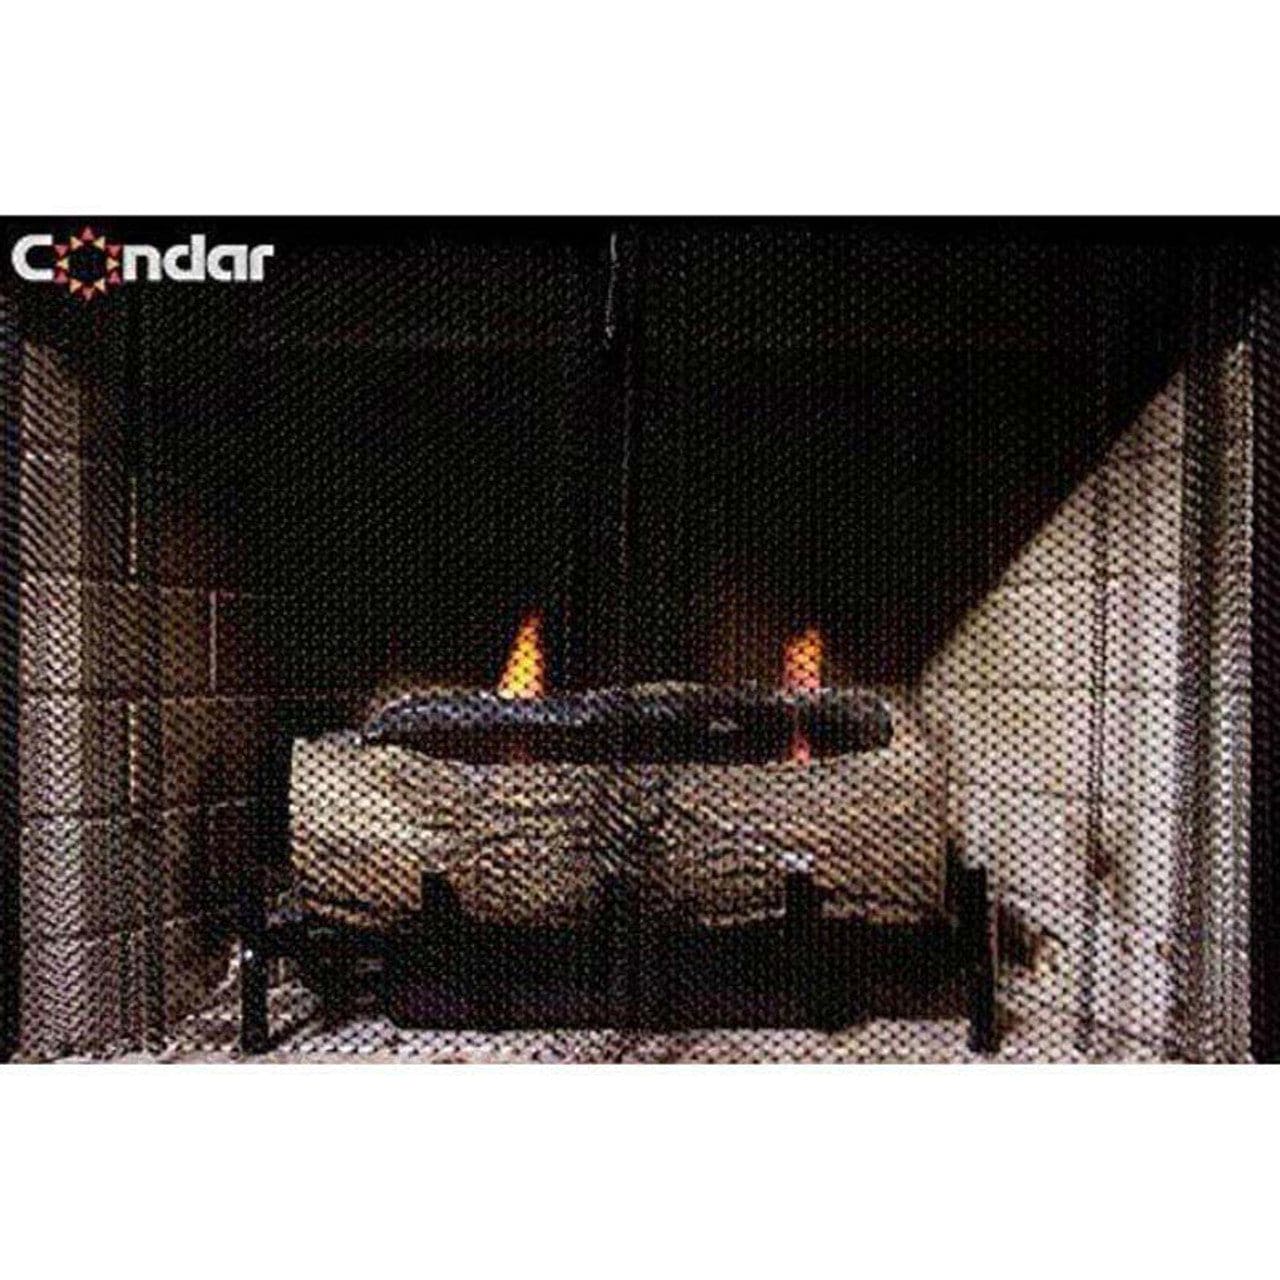 FS-2416 - 24" X 16" Condar Fireplace Screen, Set Of 2 Panels - Chimney Cricket